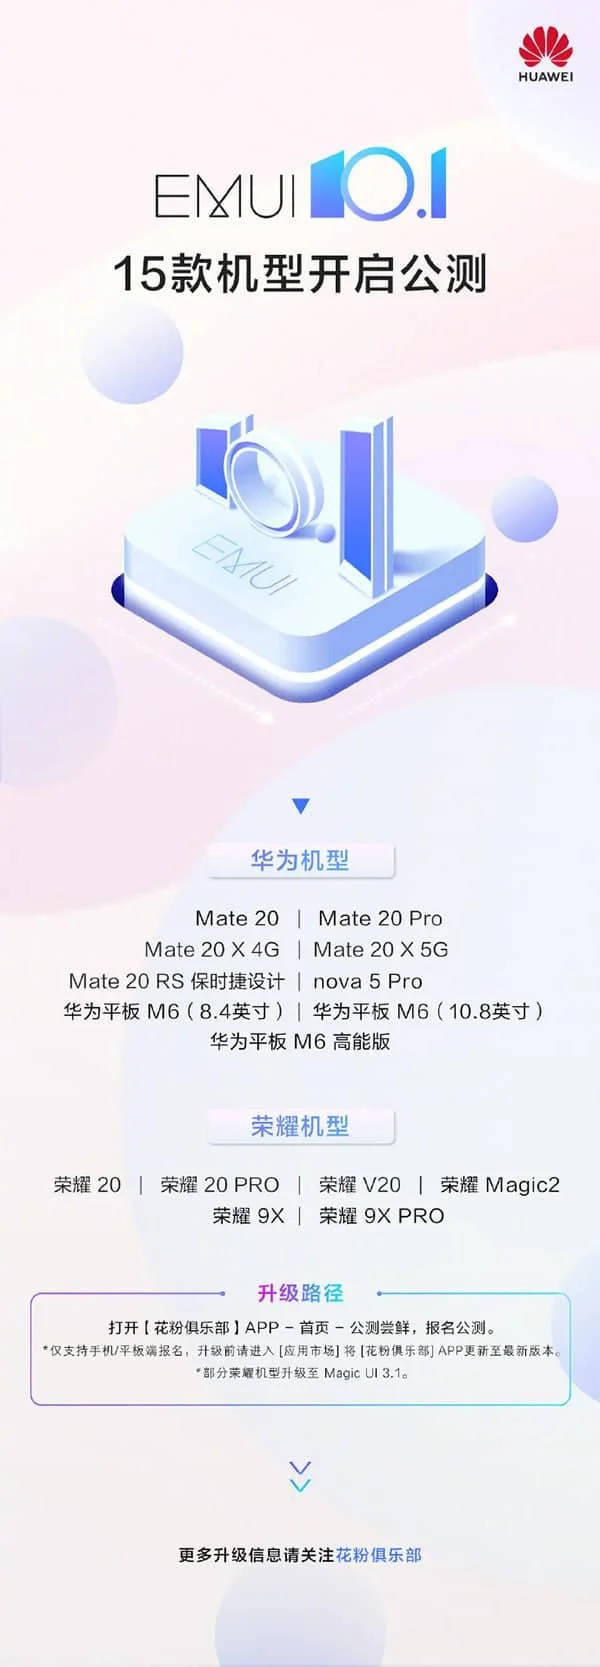 aktualizacja EMUI 10.1 beta dla Huawei Mate 20 Pro